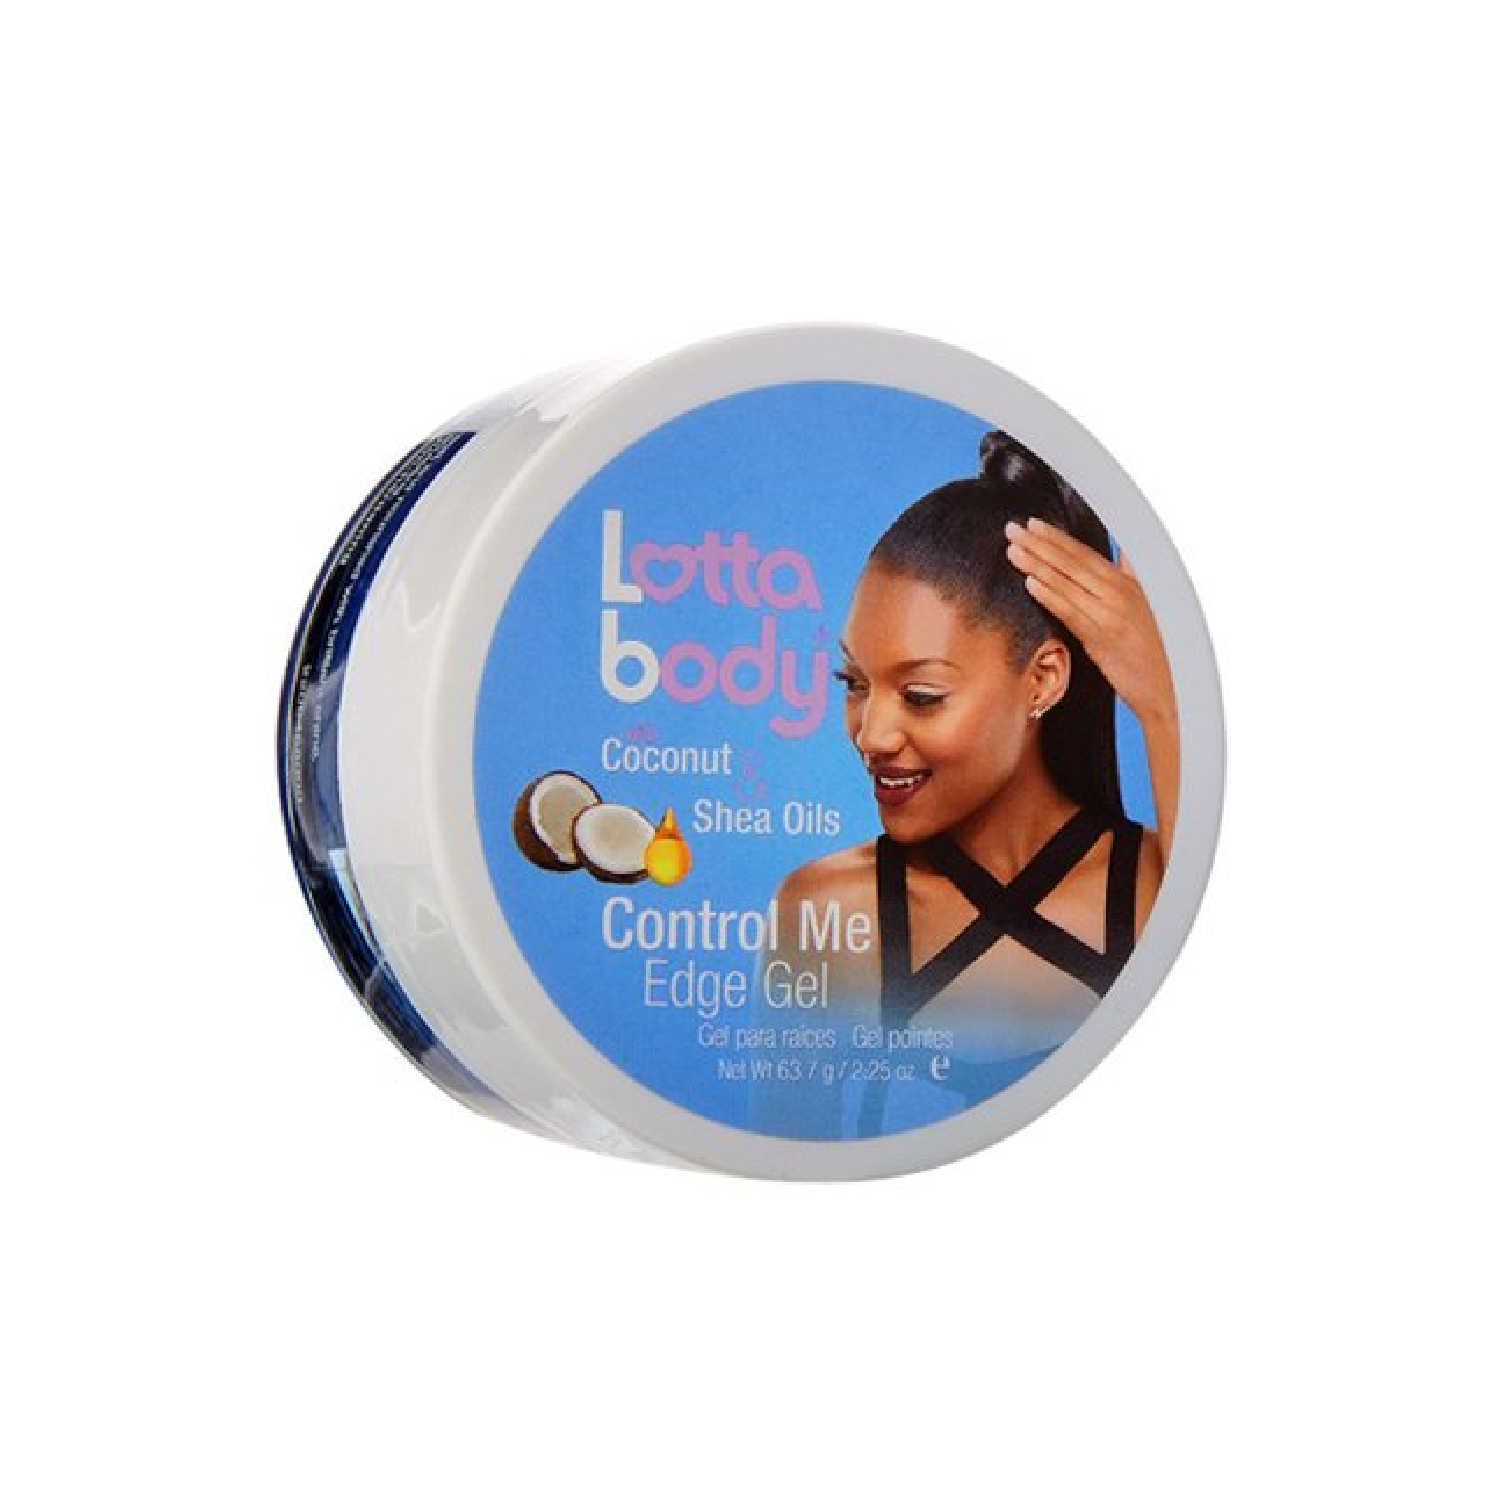 Lotta Body Edge Control Gel 2.25g | BeautyFlex UK